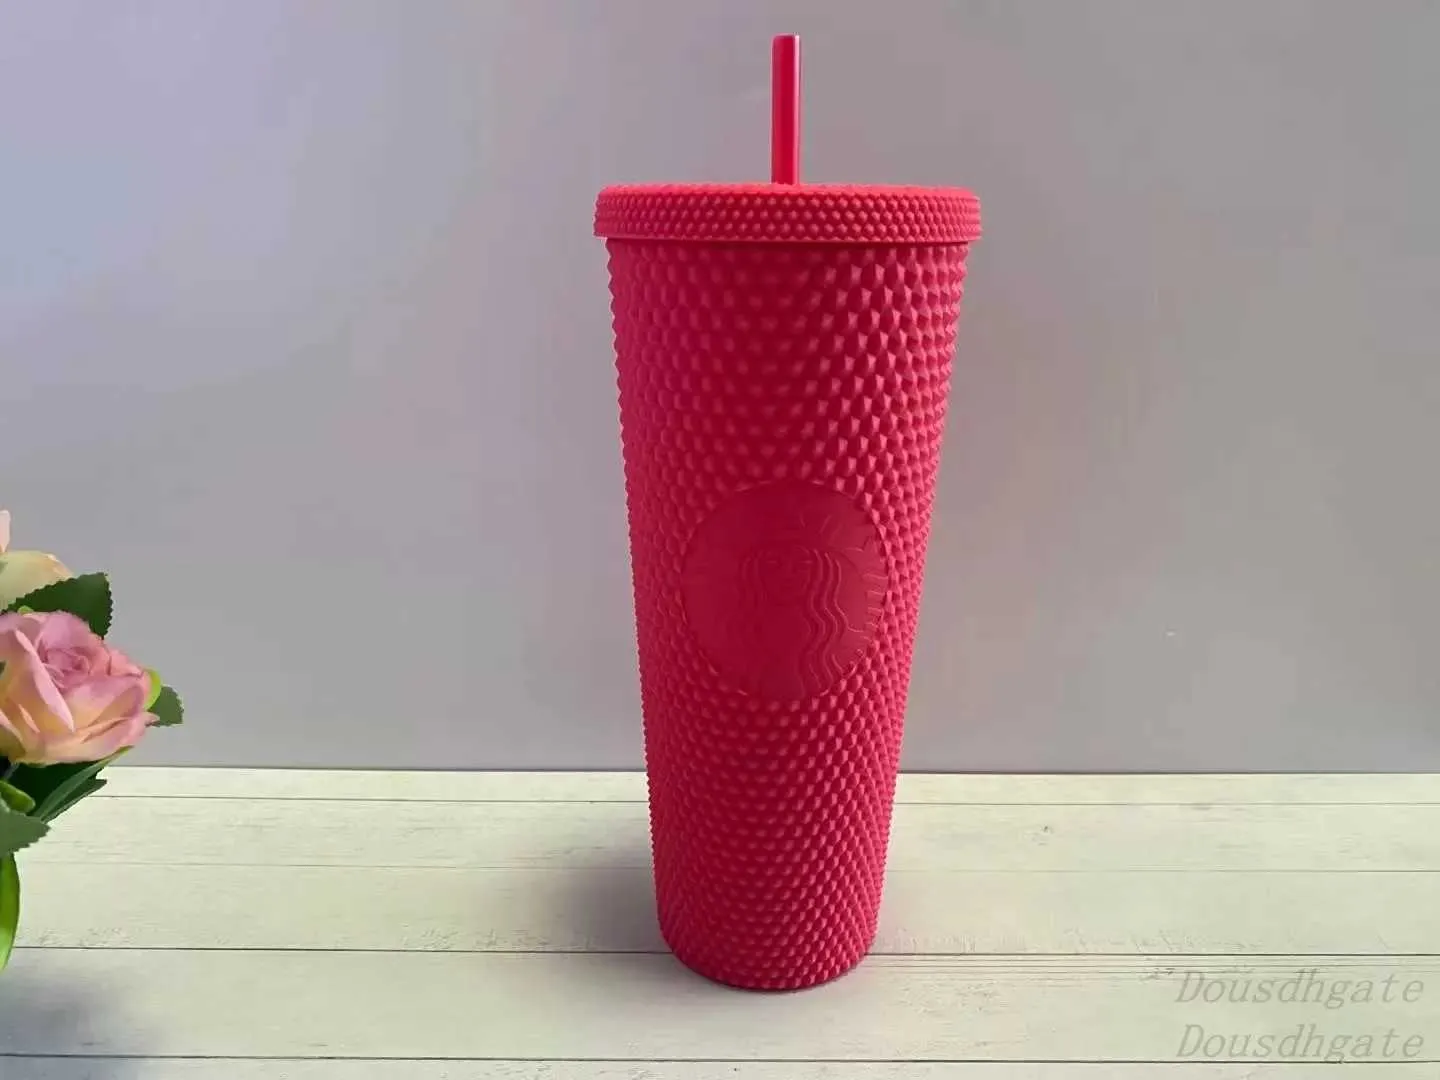 Starbucks sjöjungfru gudinna Studded Cup Tumblers 710 ml Carbie Pink Matte Black Plastic Mugs With Straw239B